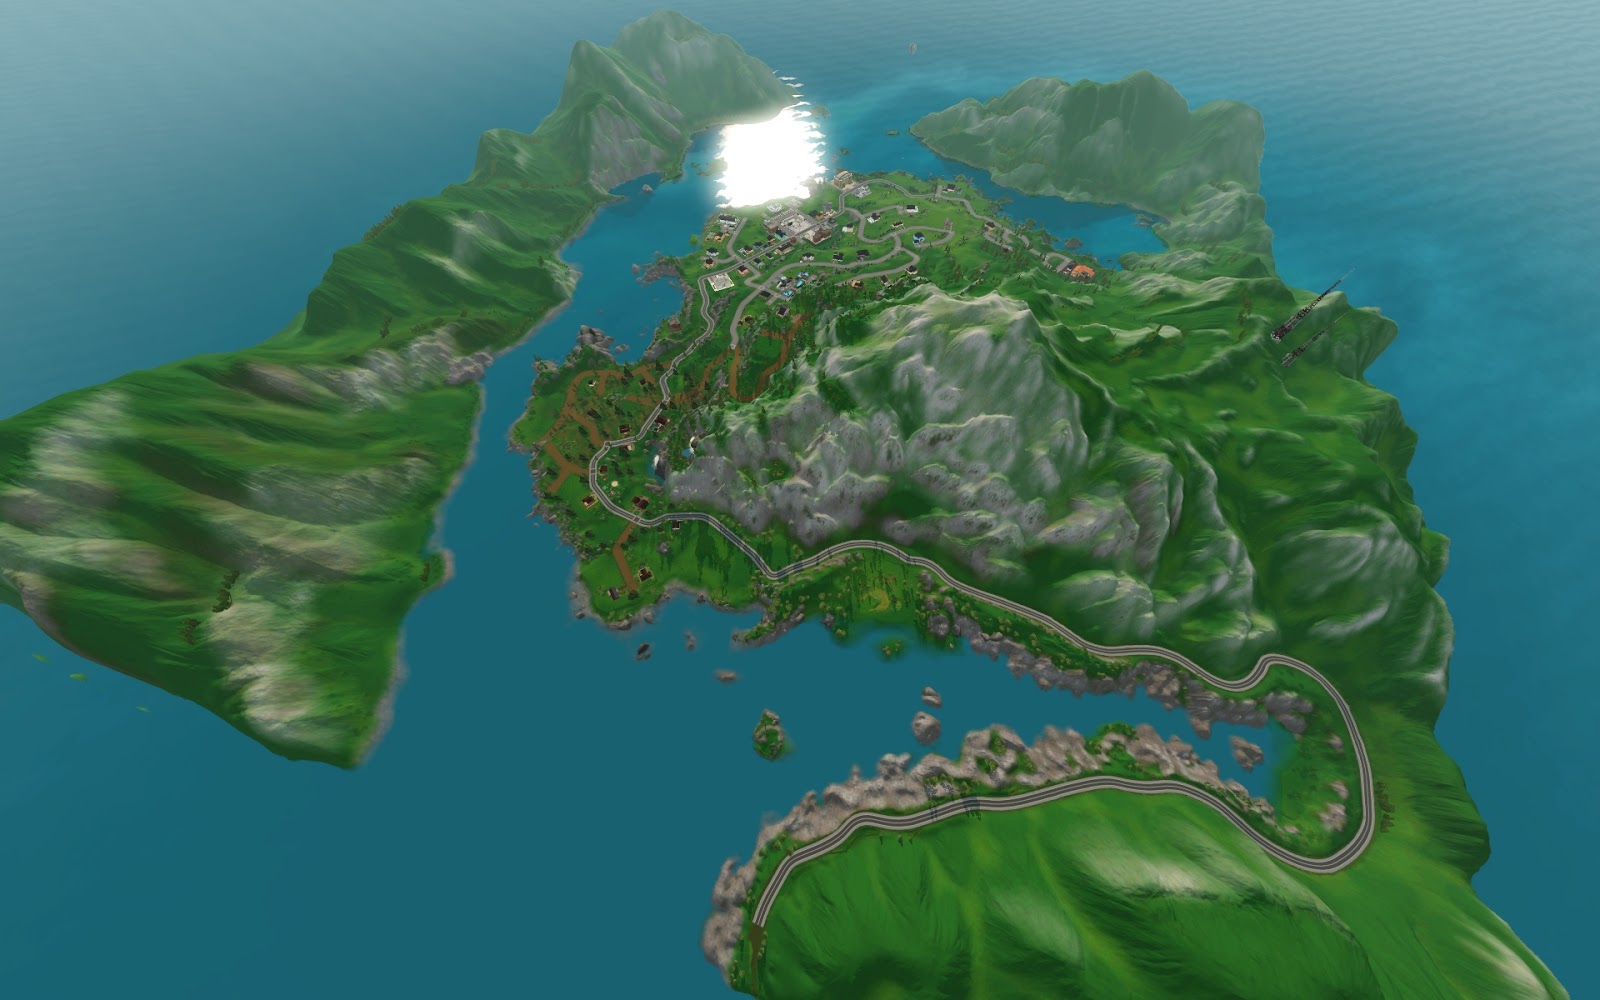 Sims 3 worlds. Симс 3 скрытые острова. Берилловые отмели симс 3. Симс 3 Северное сияние. Симс 3 Логово контрабандиста.